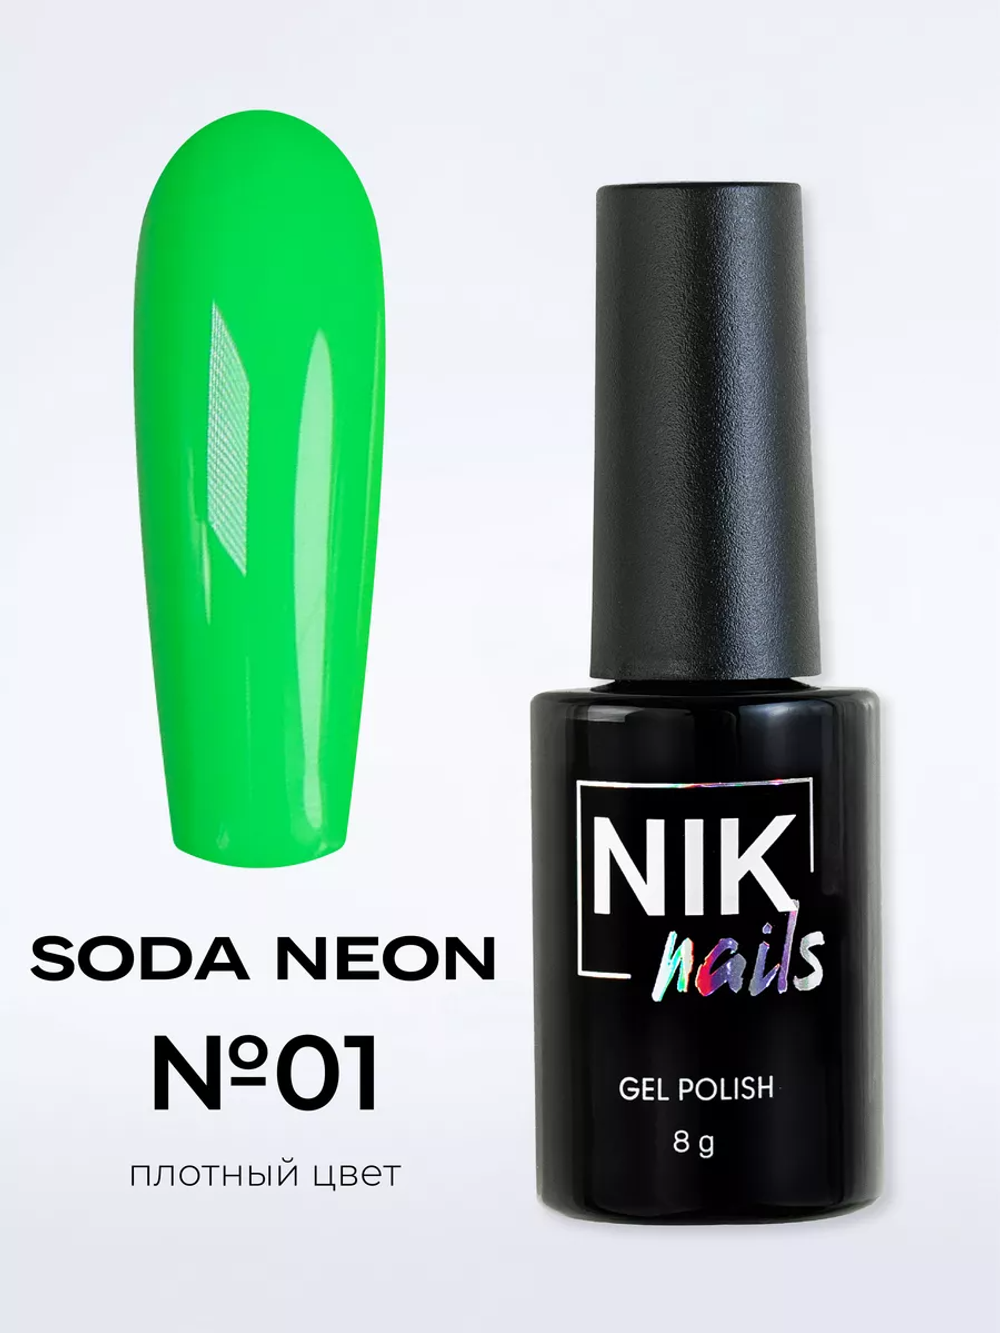 Гель лак NIK nails Soda Neon № 01 10 g